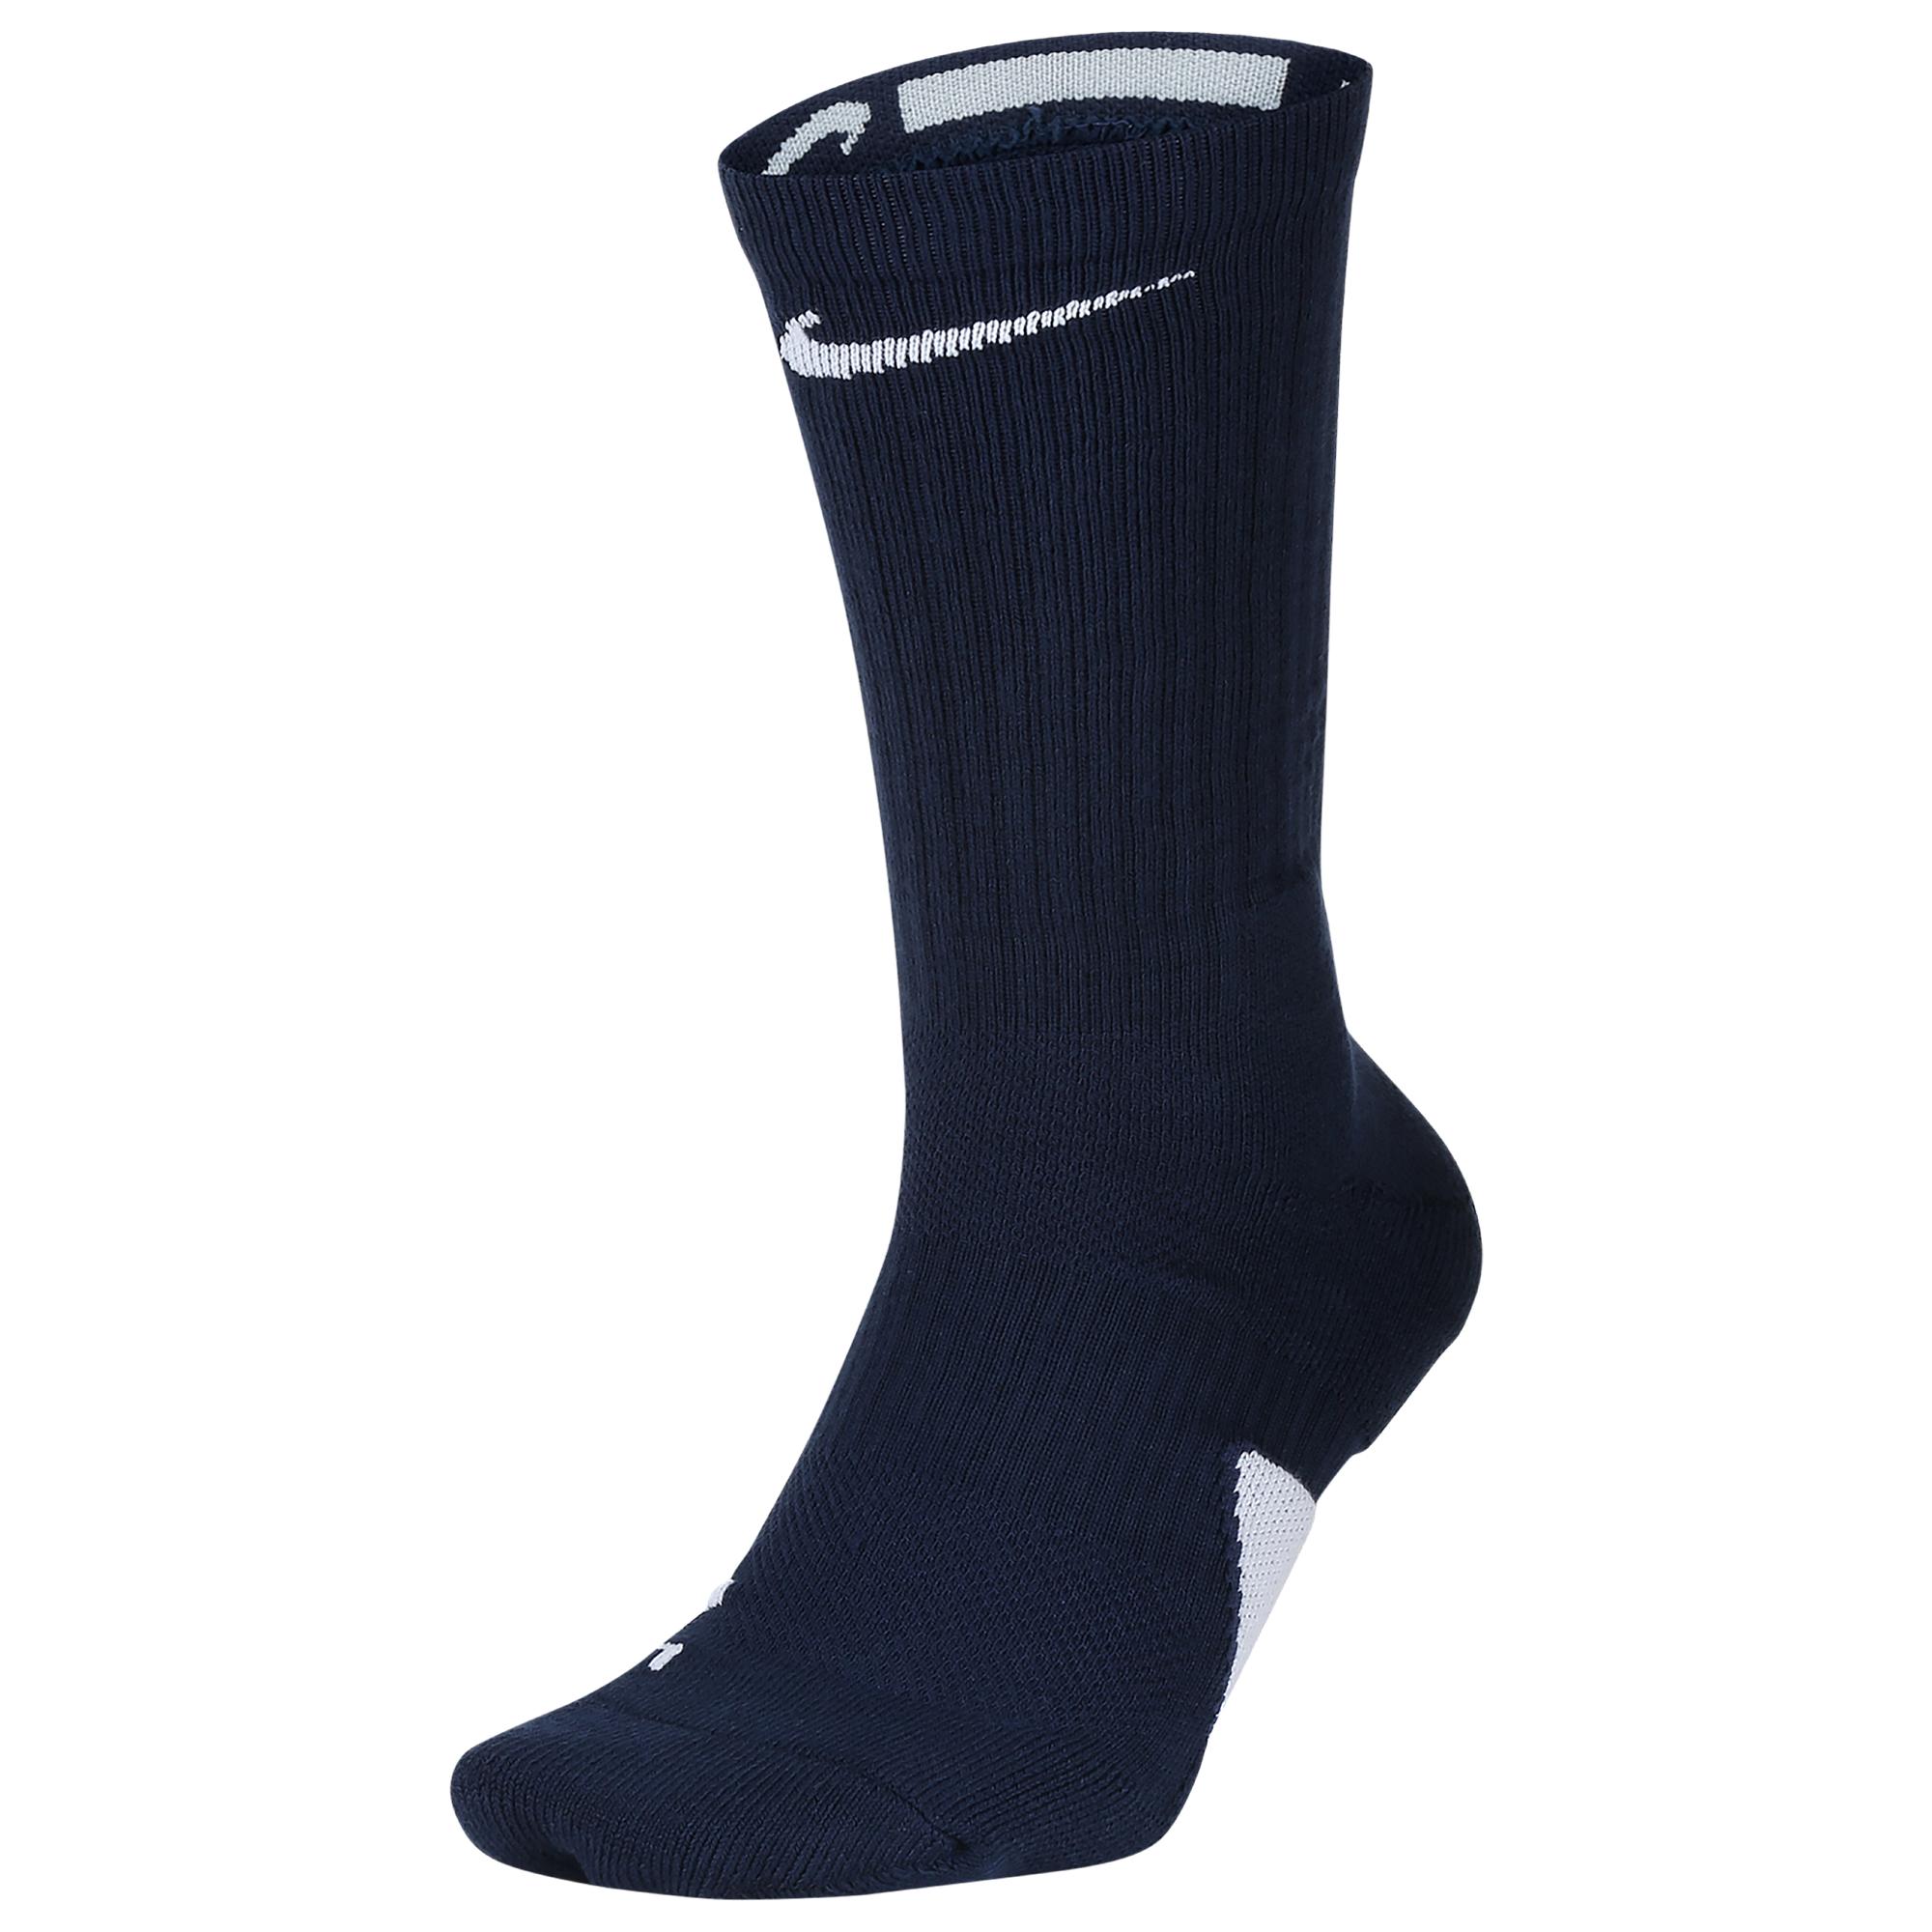 Nike Synthetic Elite Crew Socks in Midnight Navy/White (Blue) - Lyst